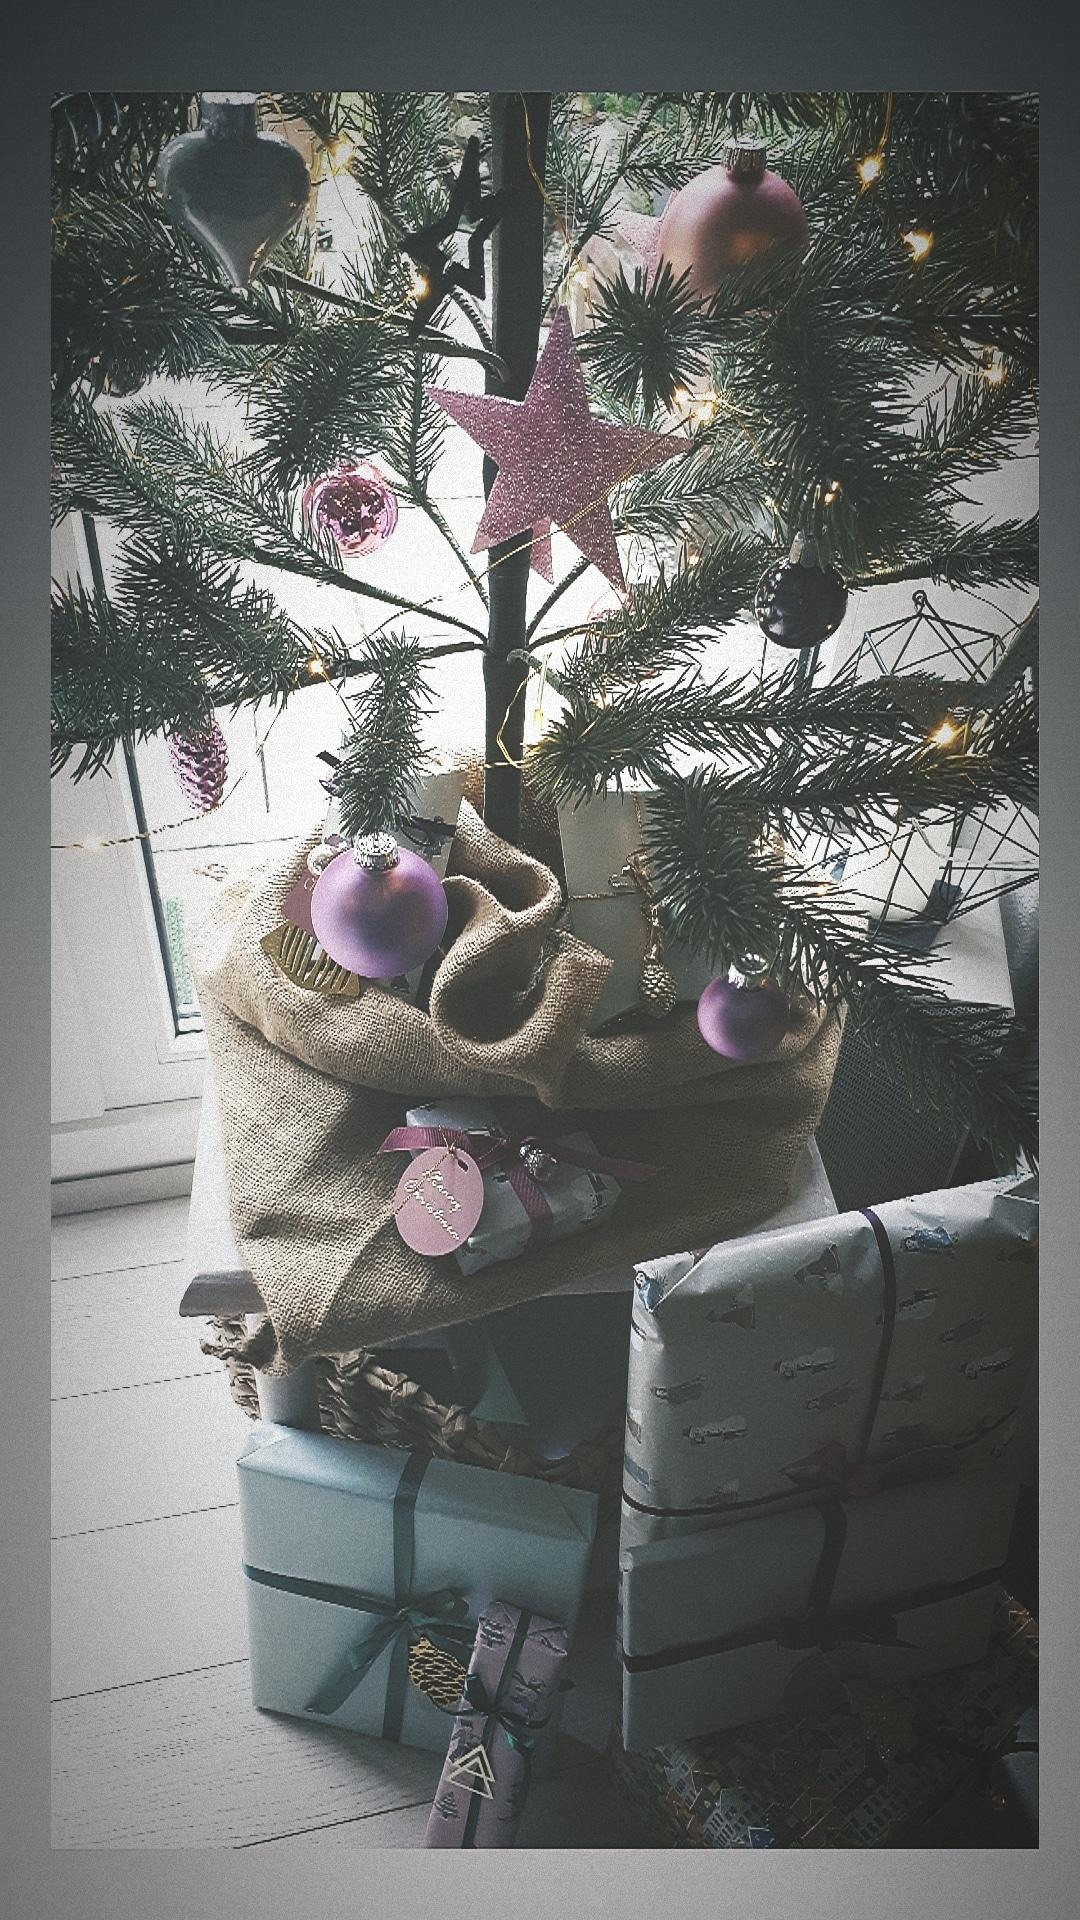 Merry Christmas 🎄🎅🌟
#home #christmastree #christmas #interior #deko #weihnachten #living  